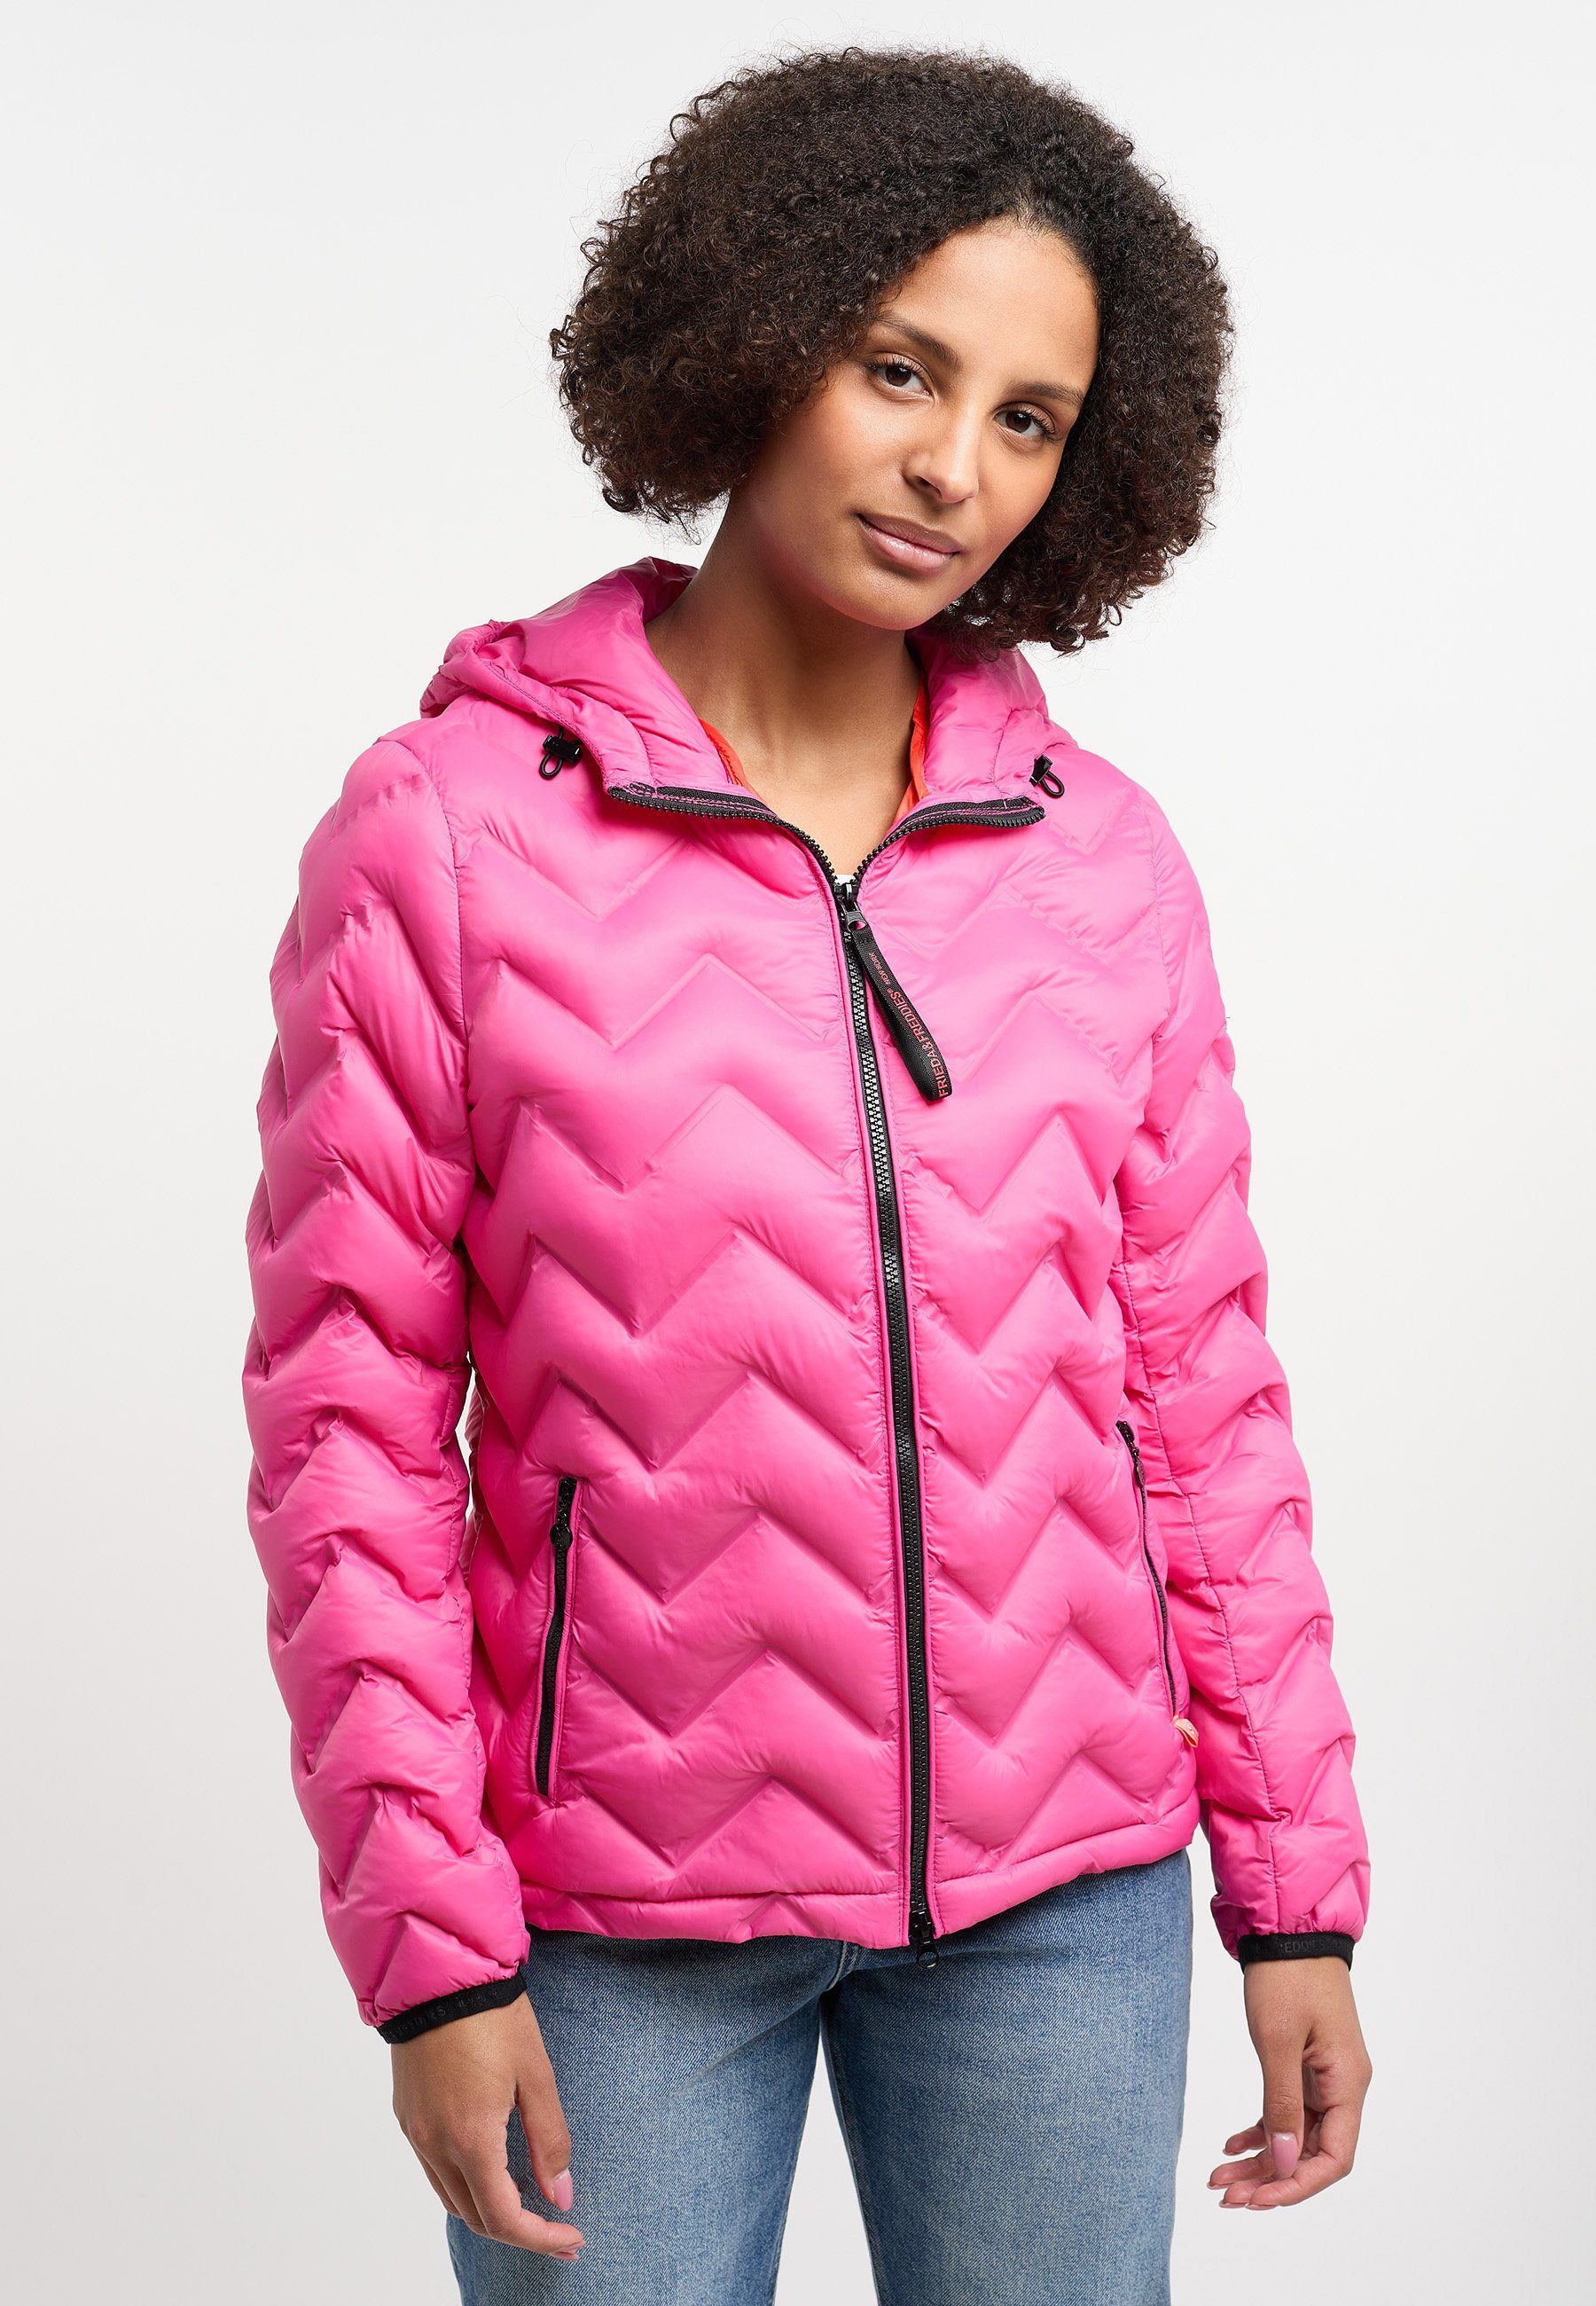 Frieda & Freddies NY pink Mailynn Thermolite Steppjacke mit Reißverschluss Jacket